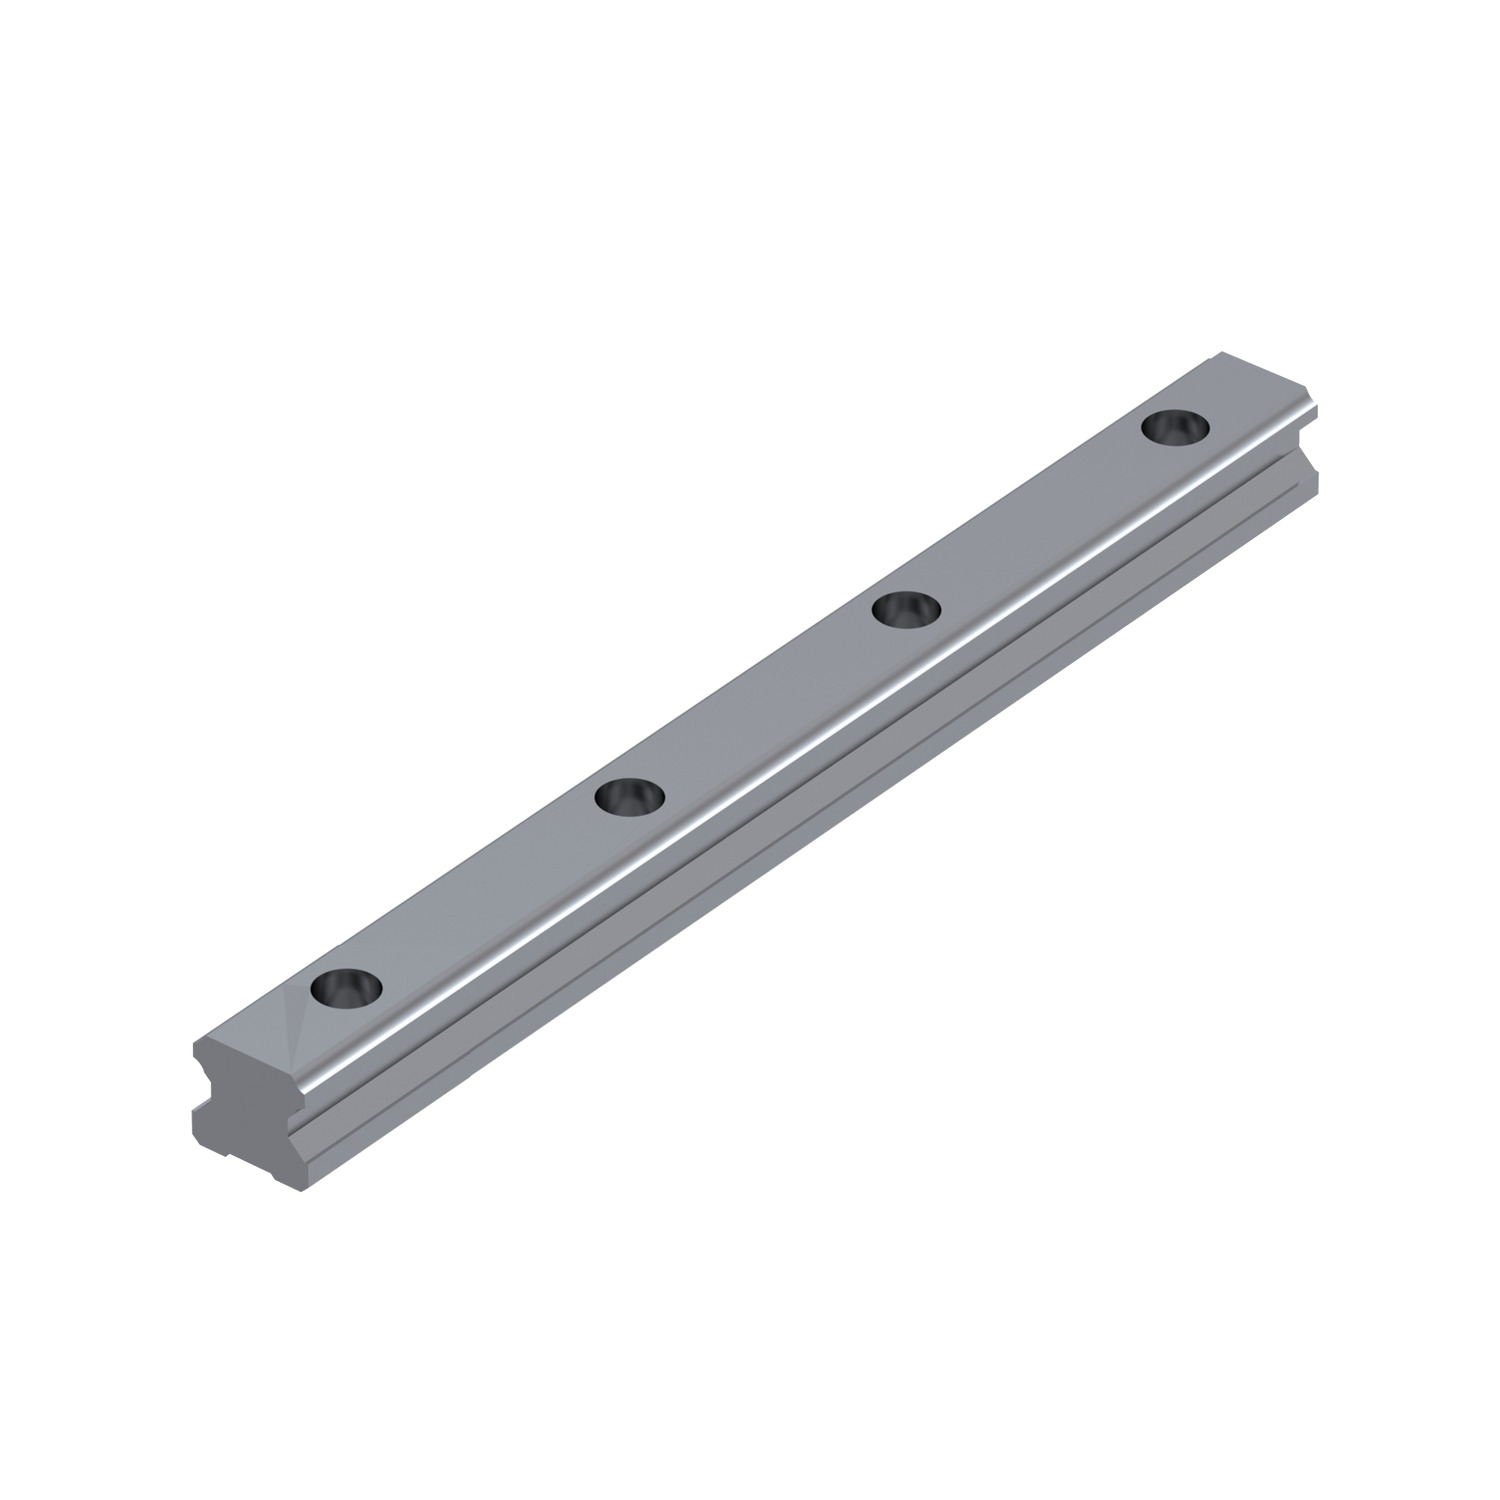 L1016.55 - 55mm Linear Guide Rail